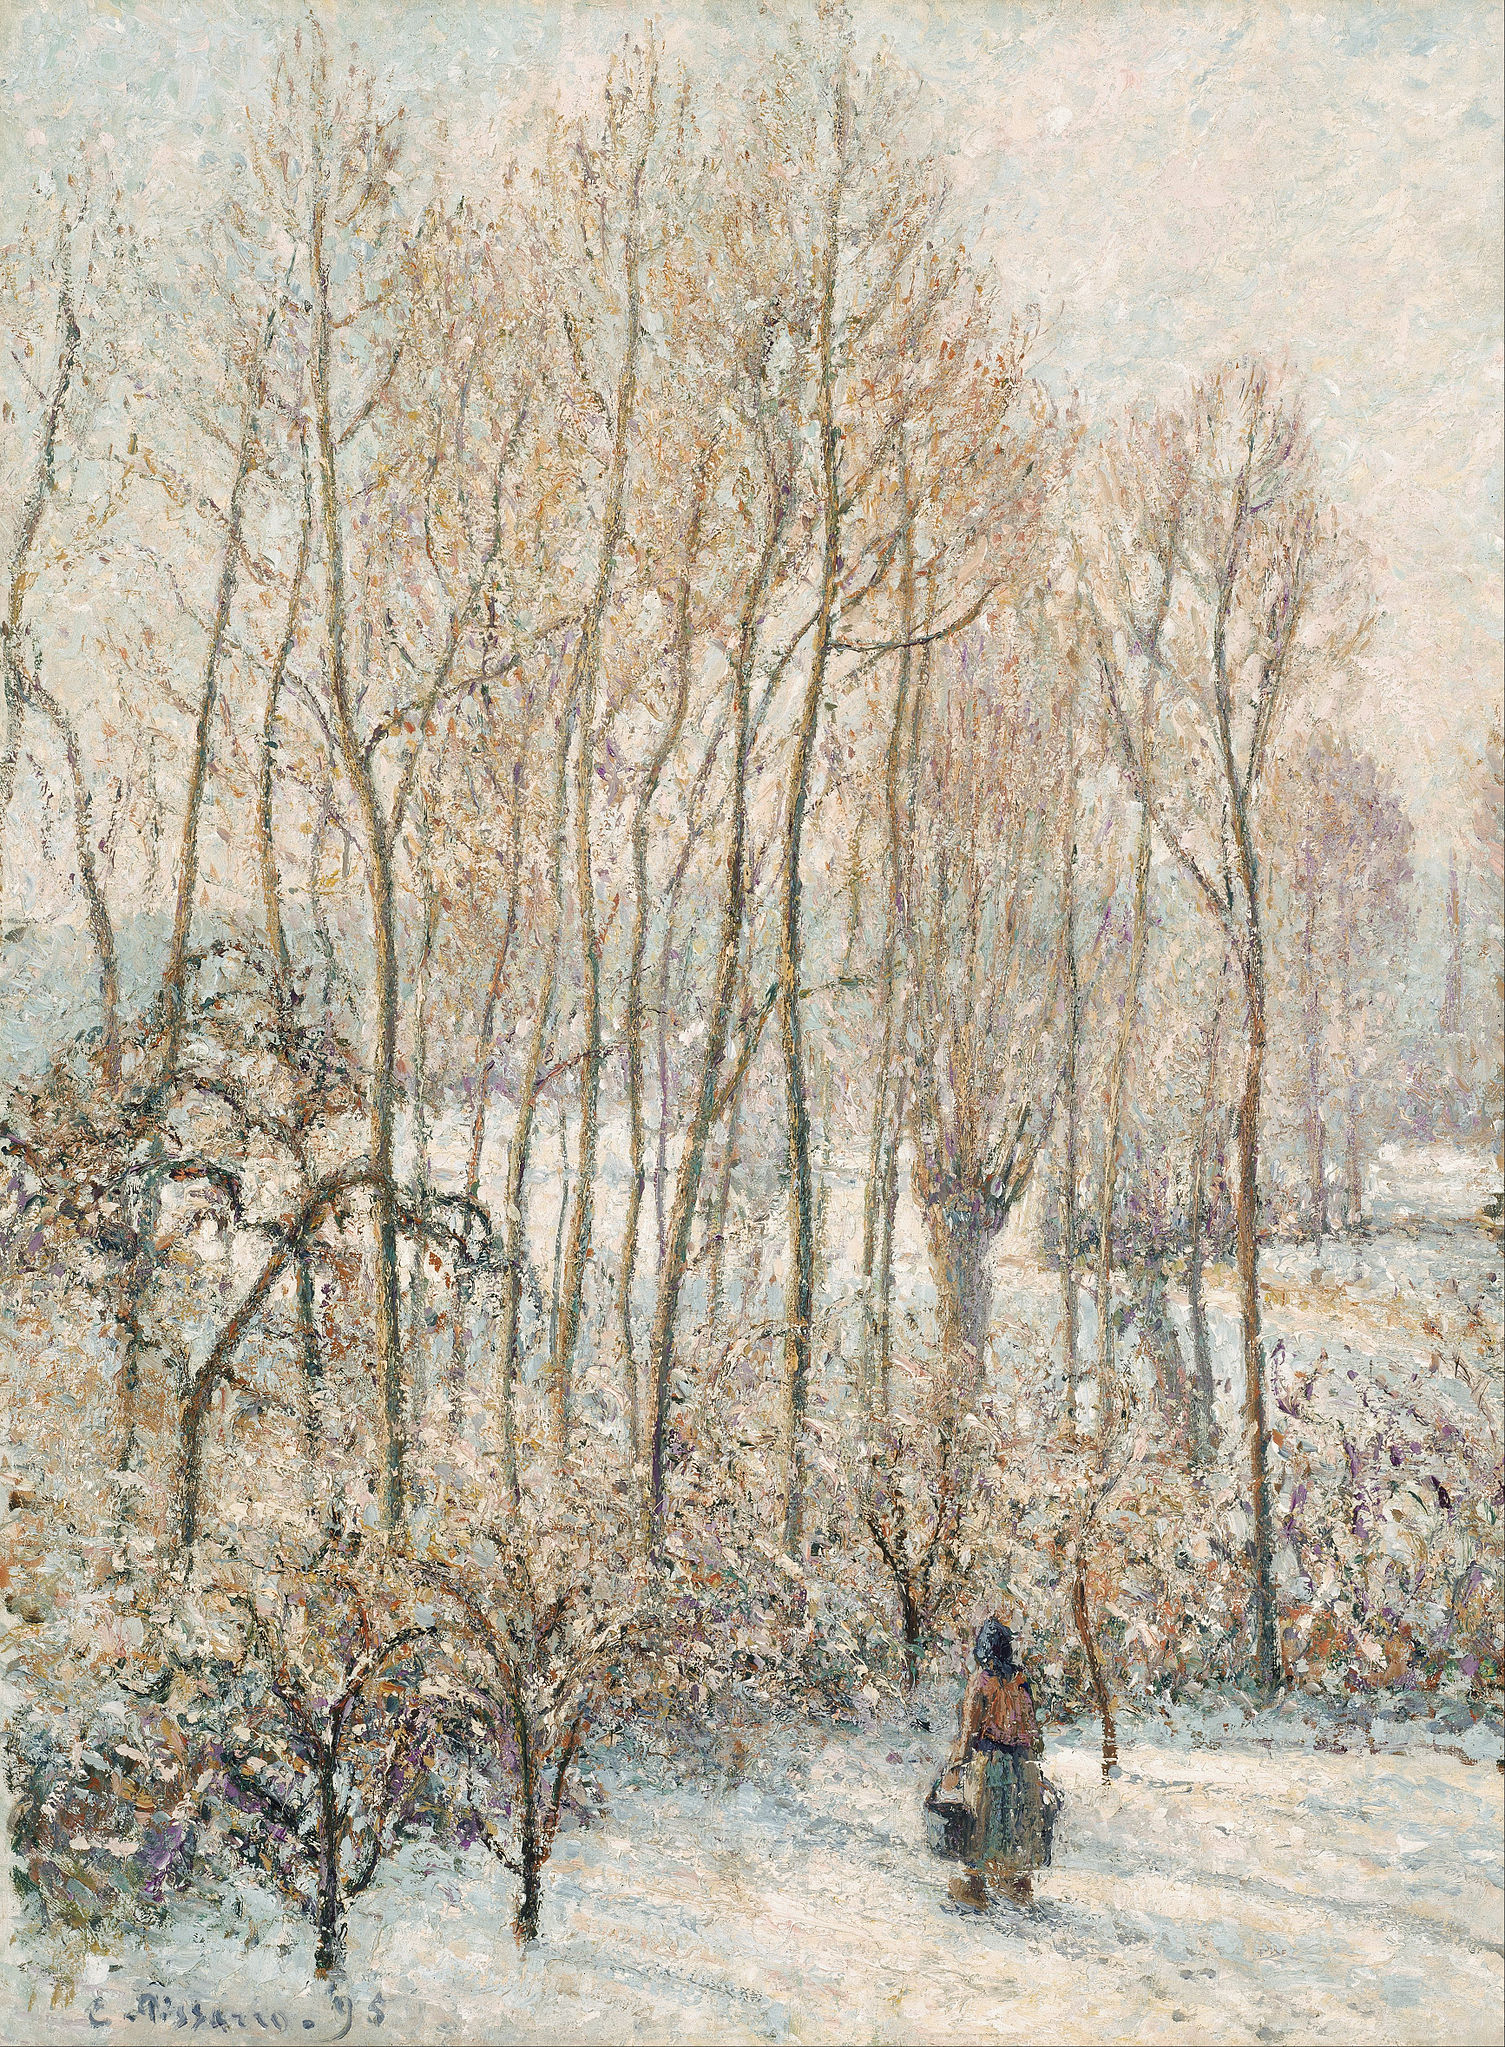 Morgonens solljus på snön, Éragny-sur-Epte by Camille Pissarro - 1895 - 82,3 x 61,6 cm 